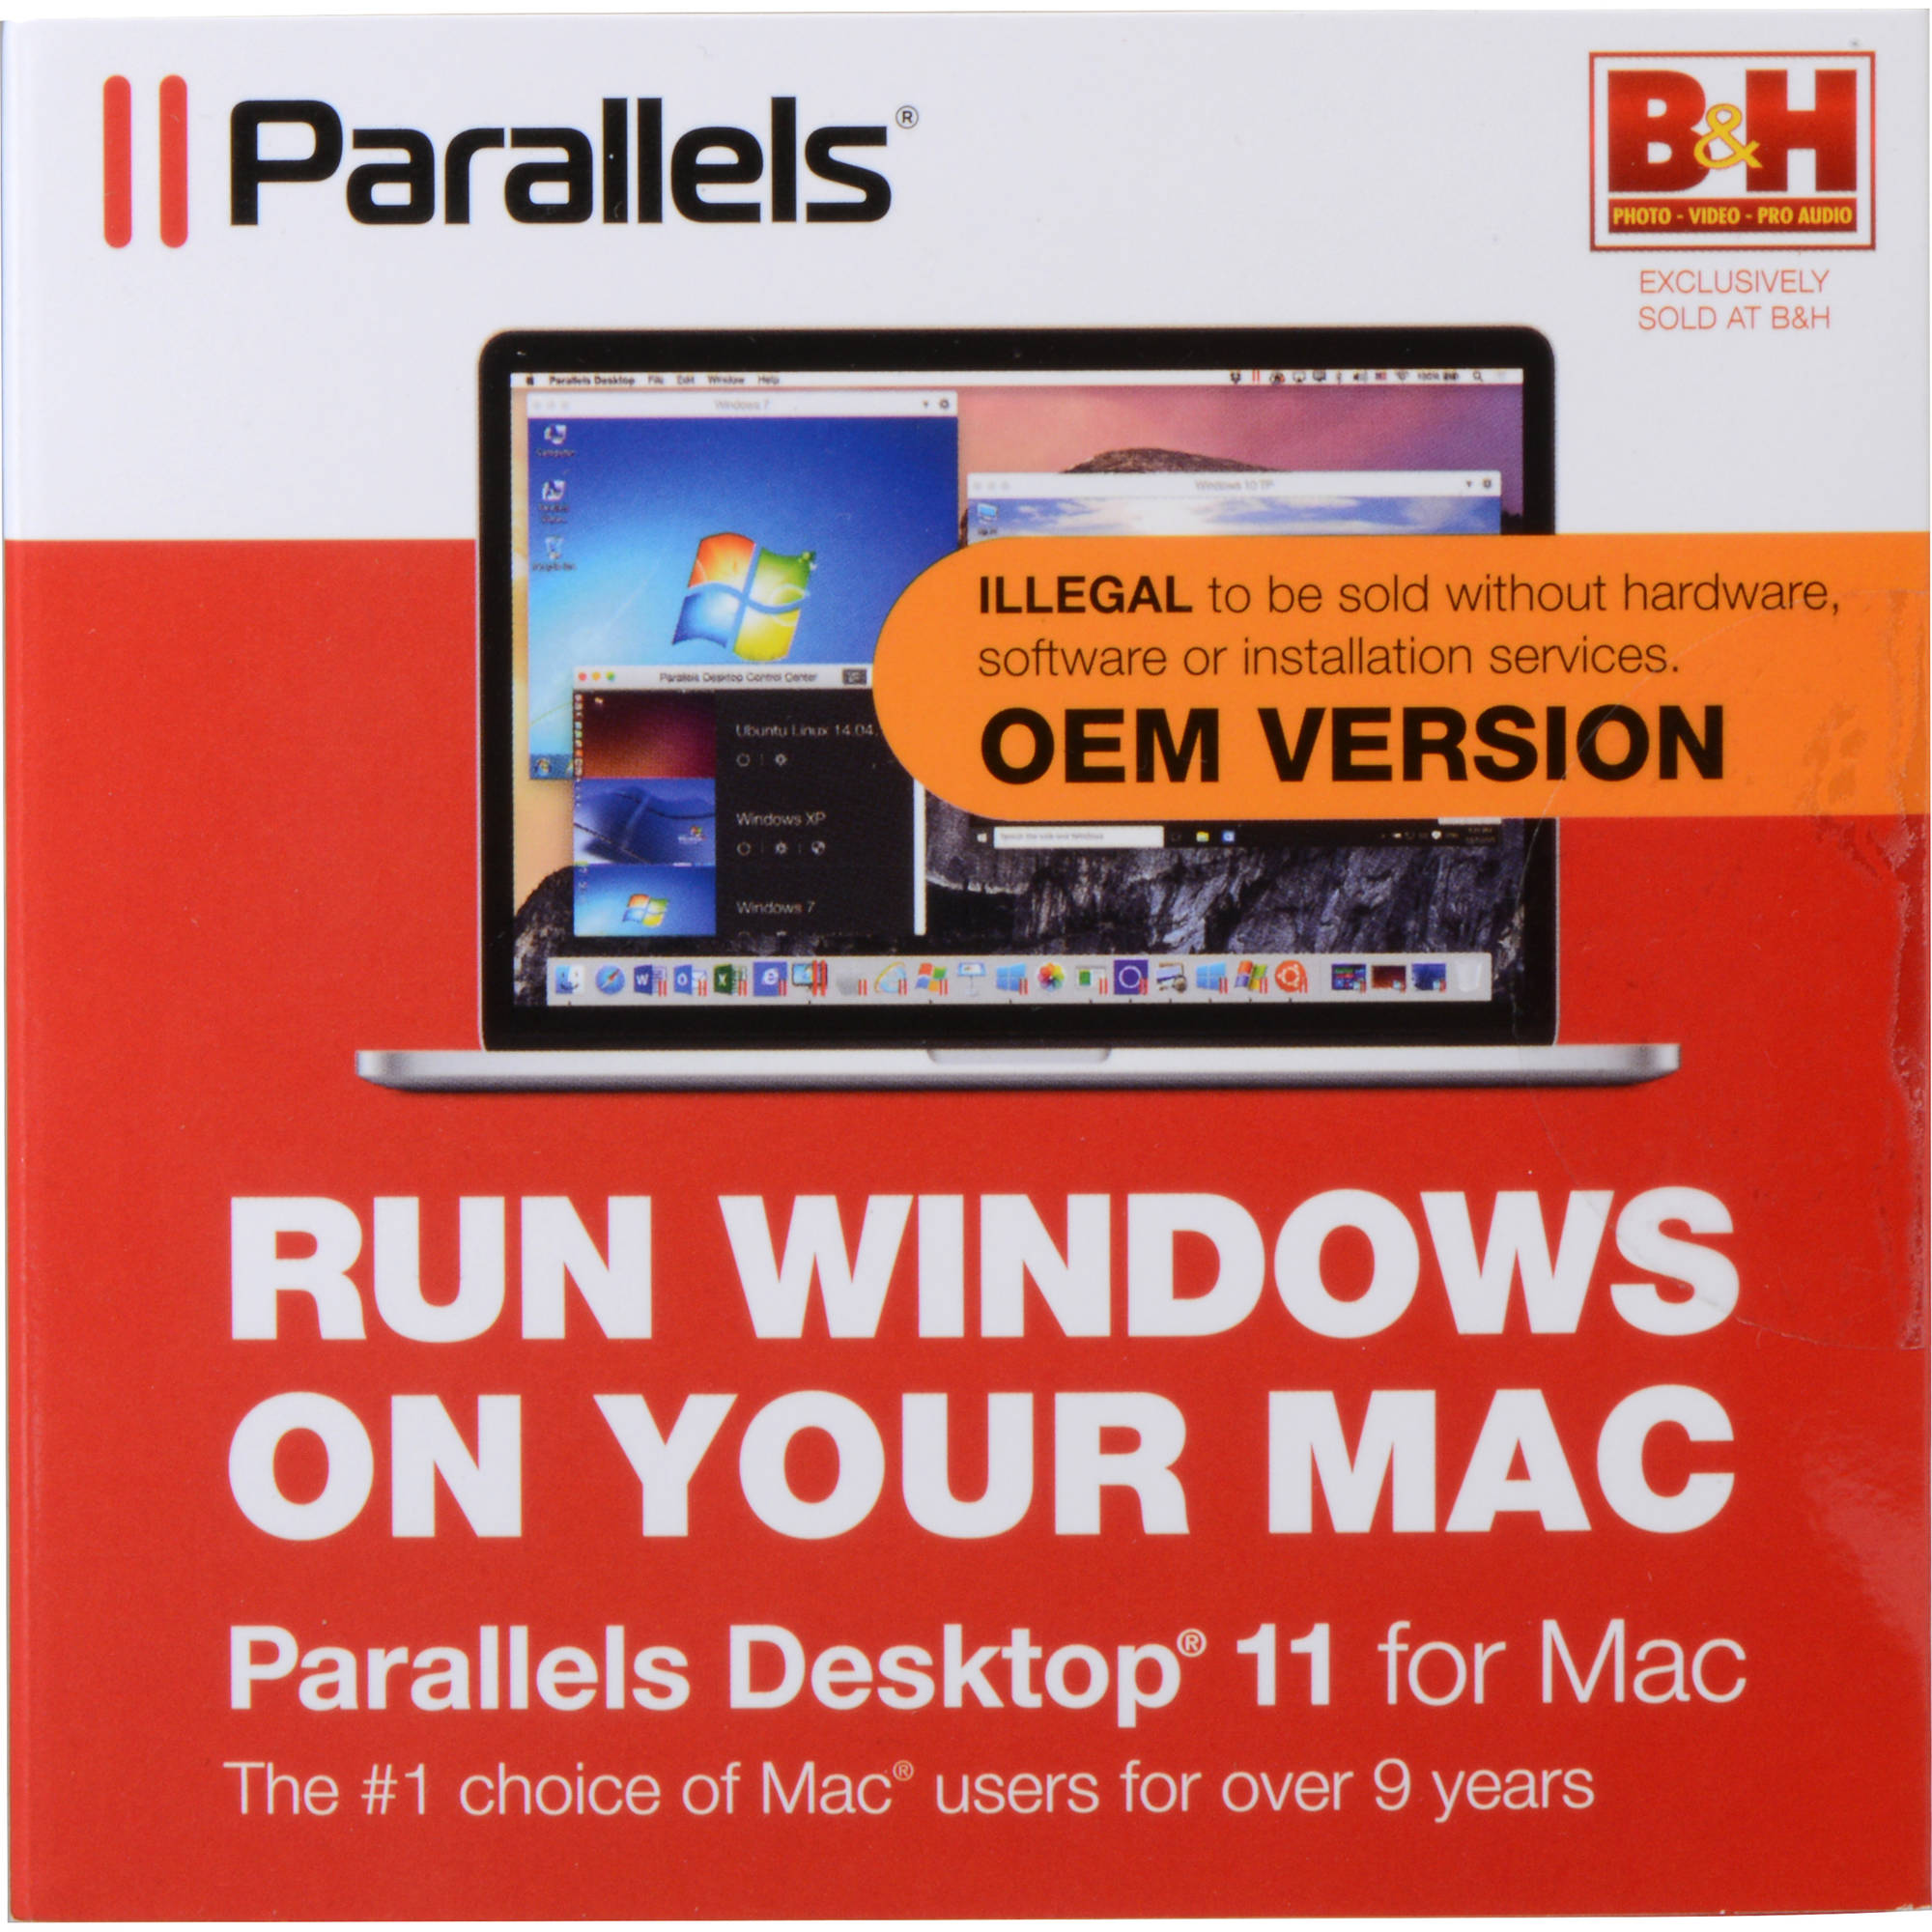 install parallels desktop 11 for mac